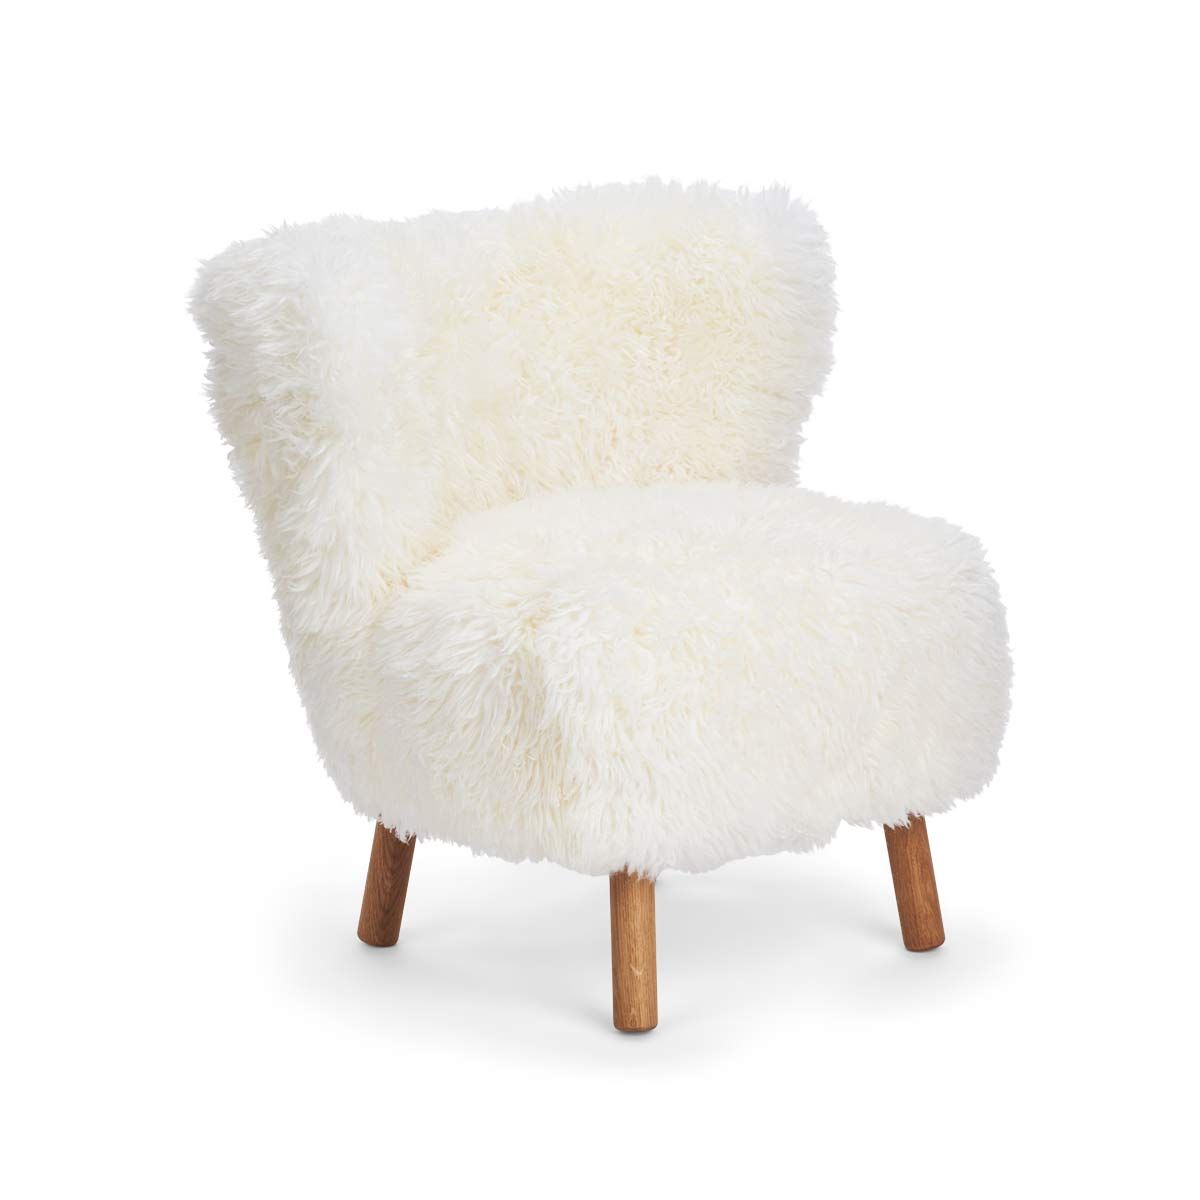 NC | Interior Emily Lounge Chair